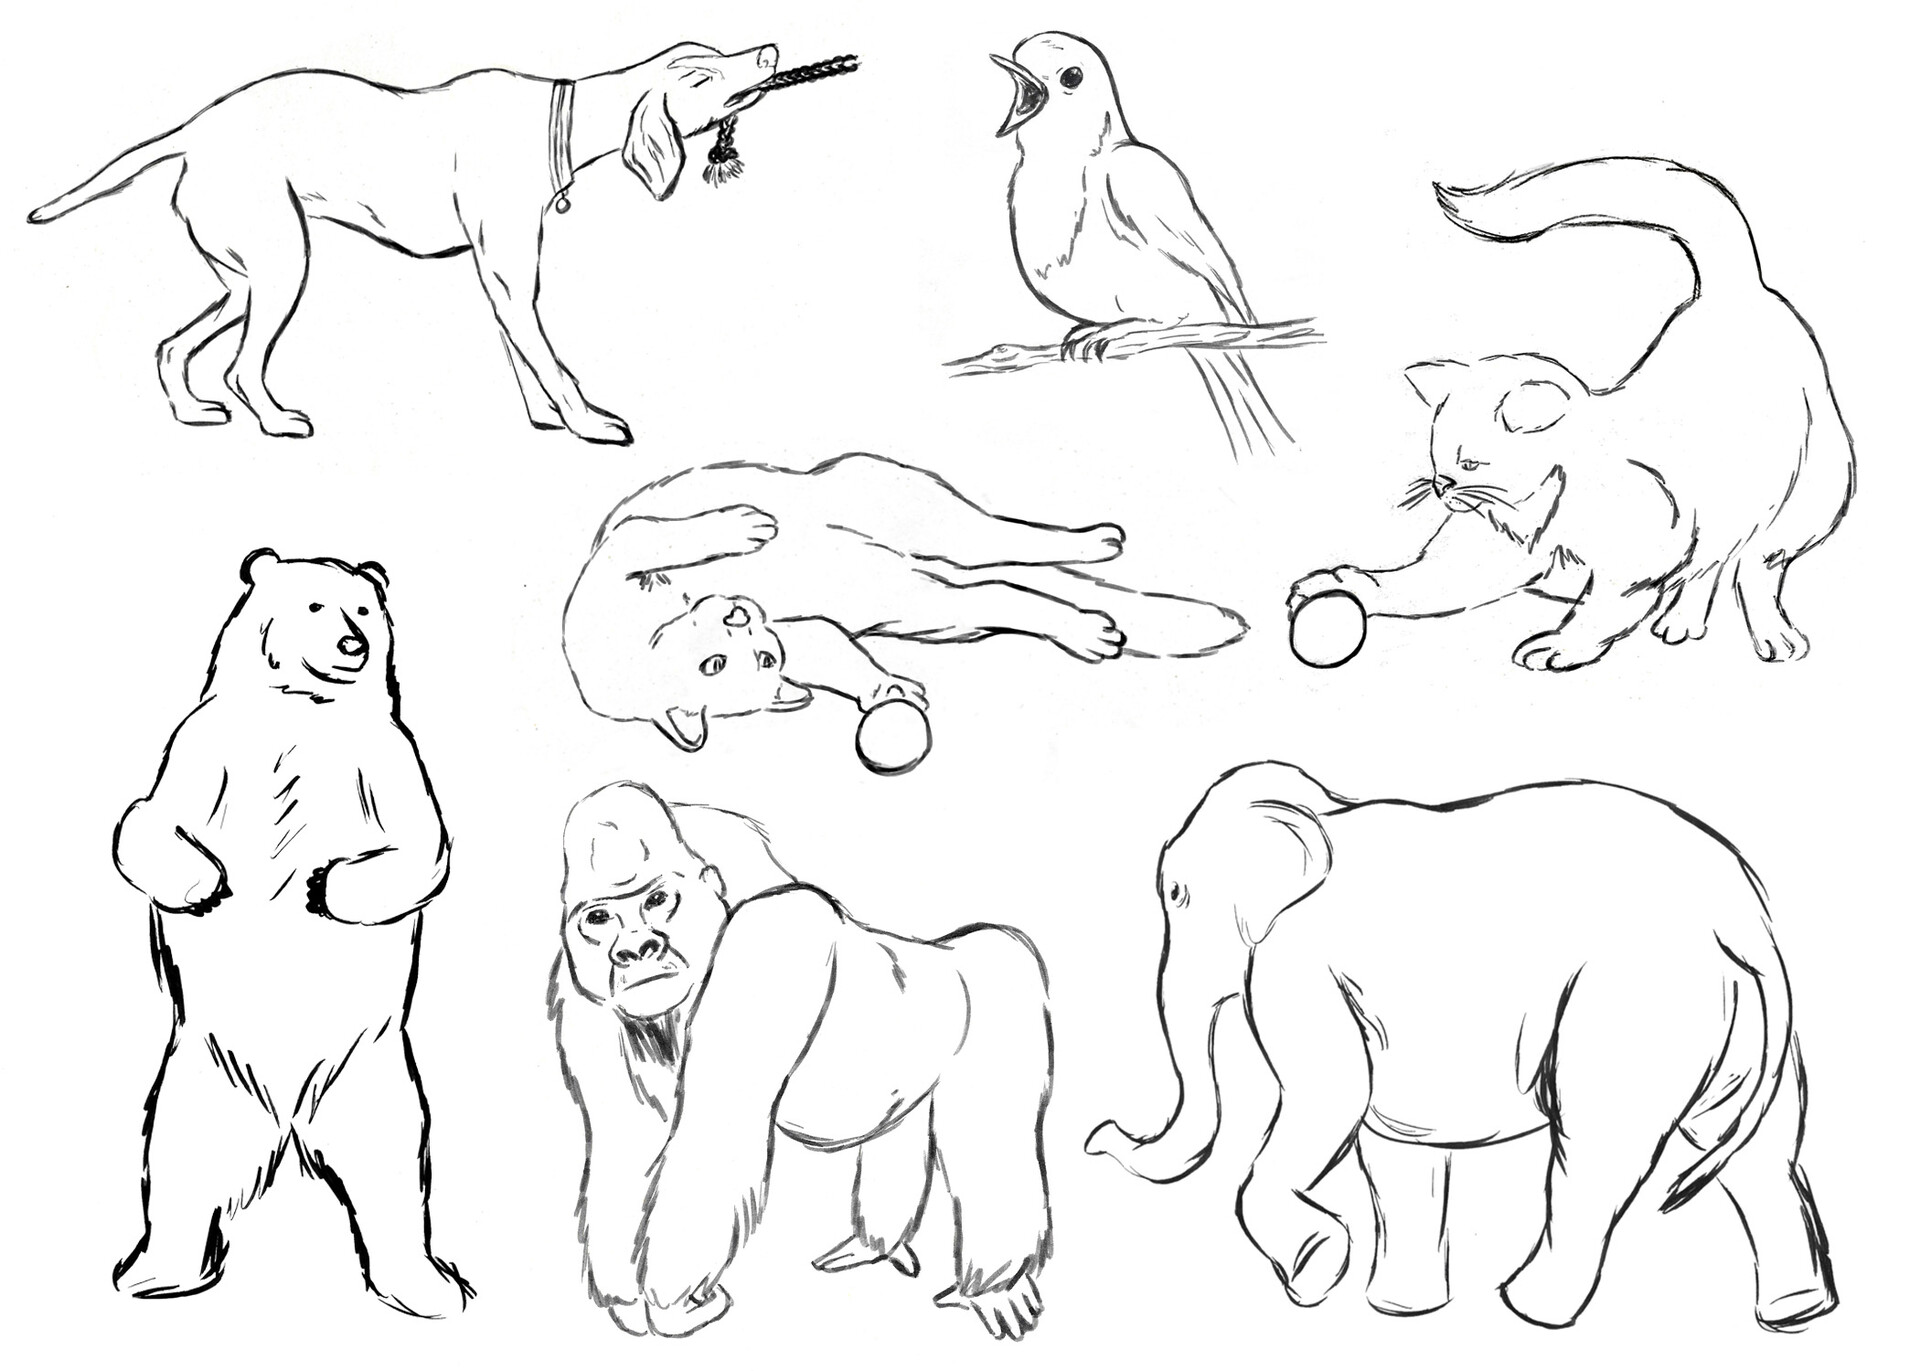 ArtStation - Gesture Drawing - Animals